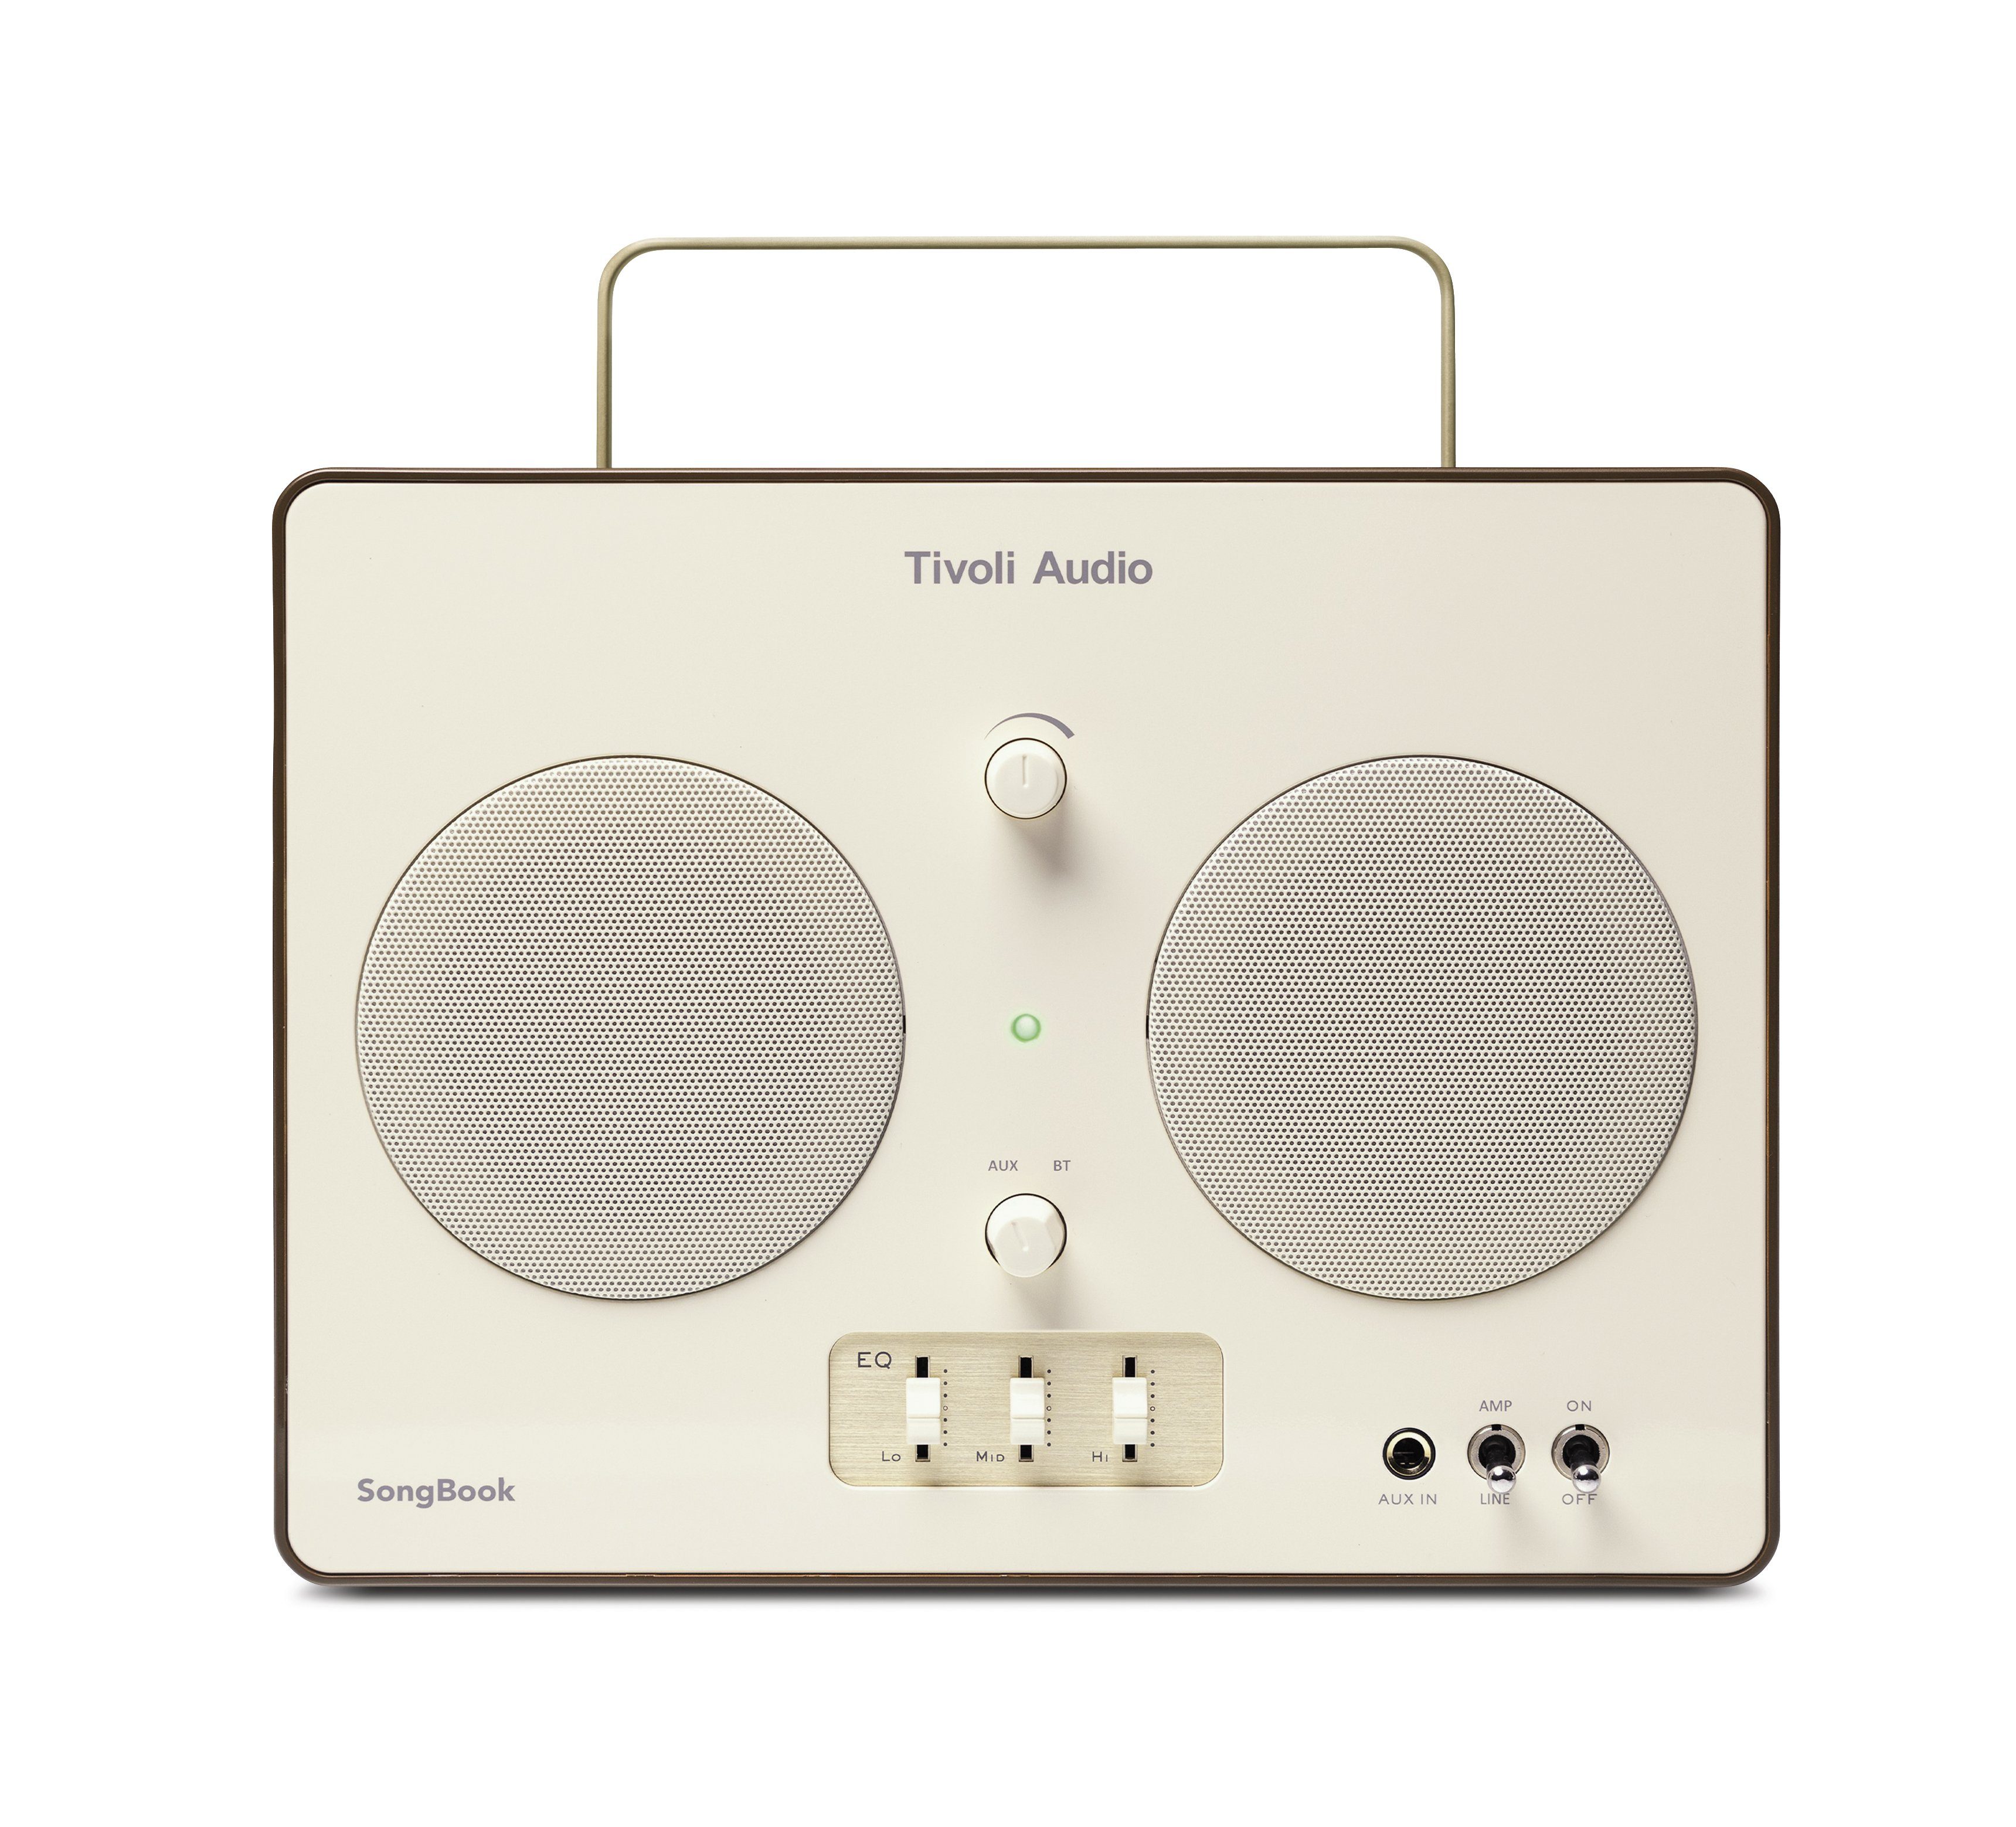 Tivoli Audio SongBook Bluetooth-Lautsprecher (analoger Equalizer, tragbarer Lautsprecher, 10 h Akku-Laufzeit)